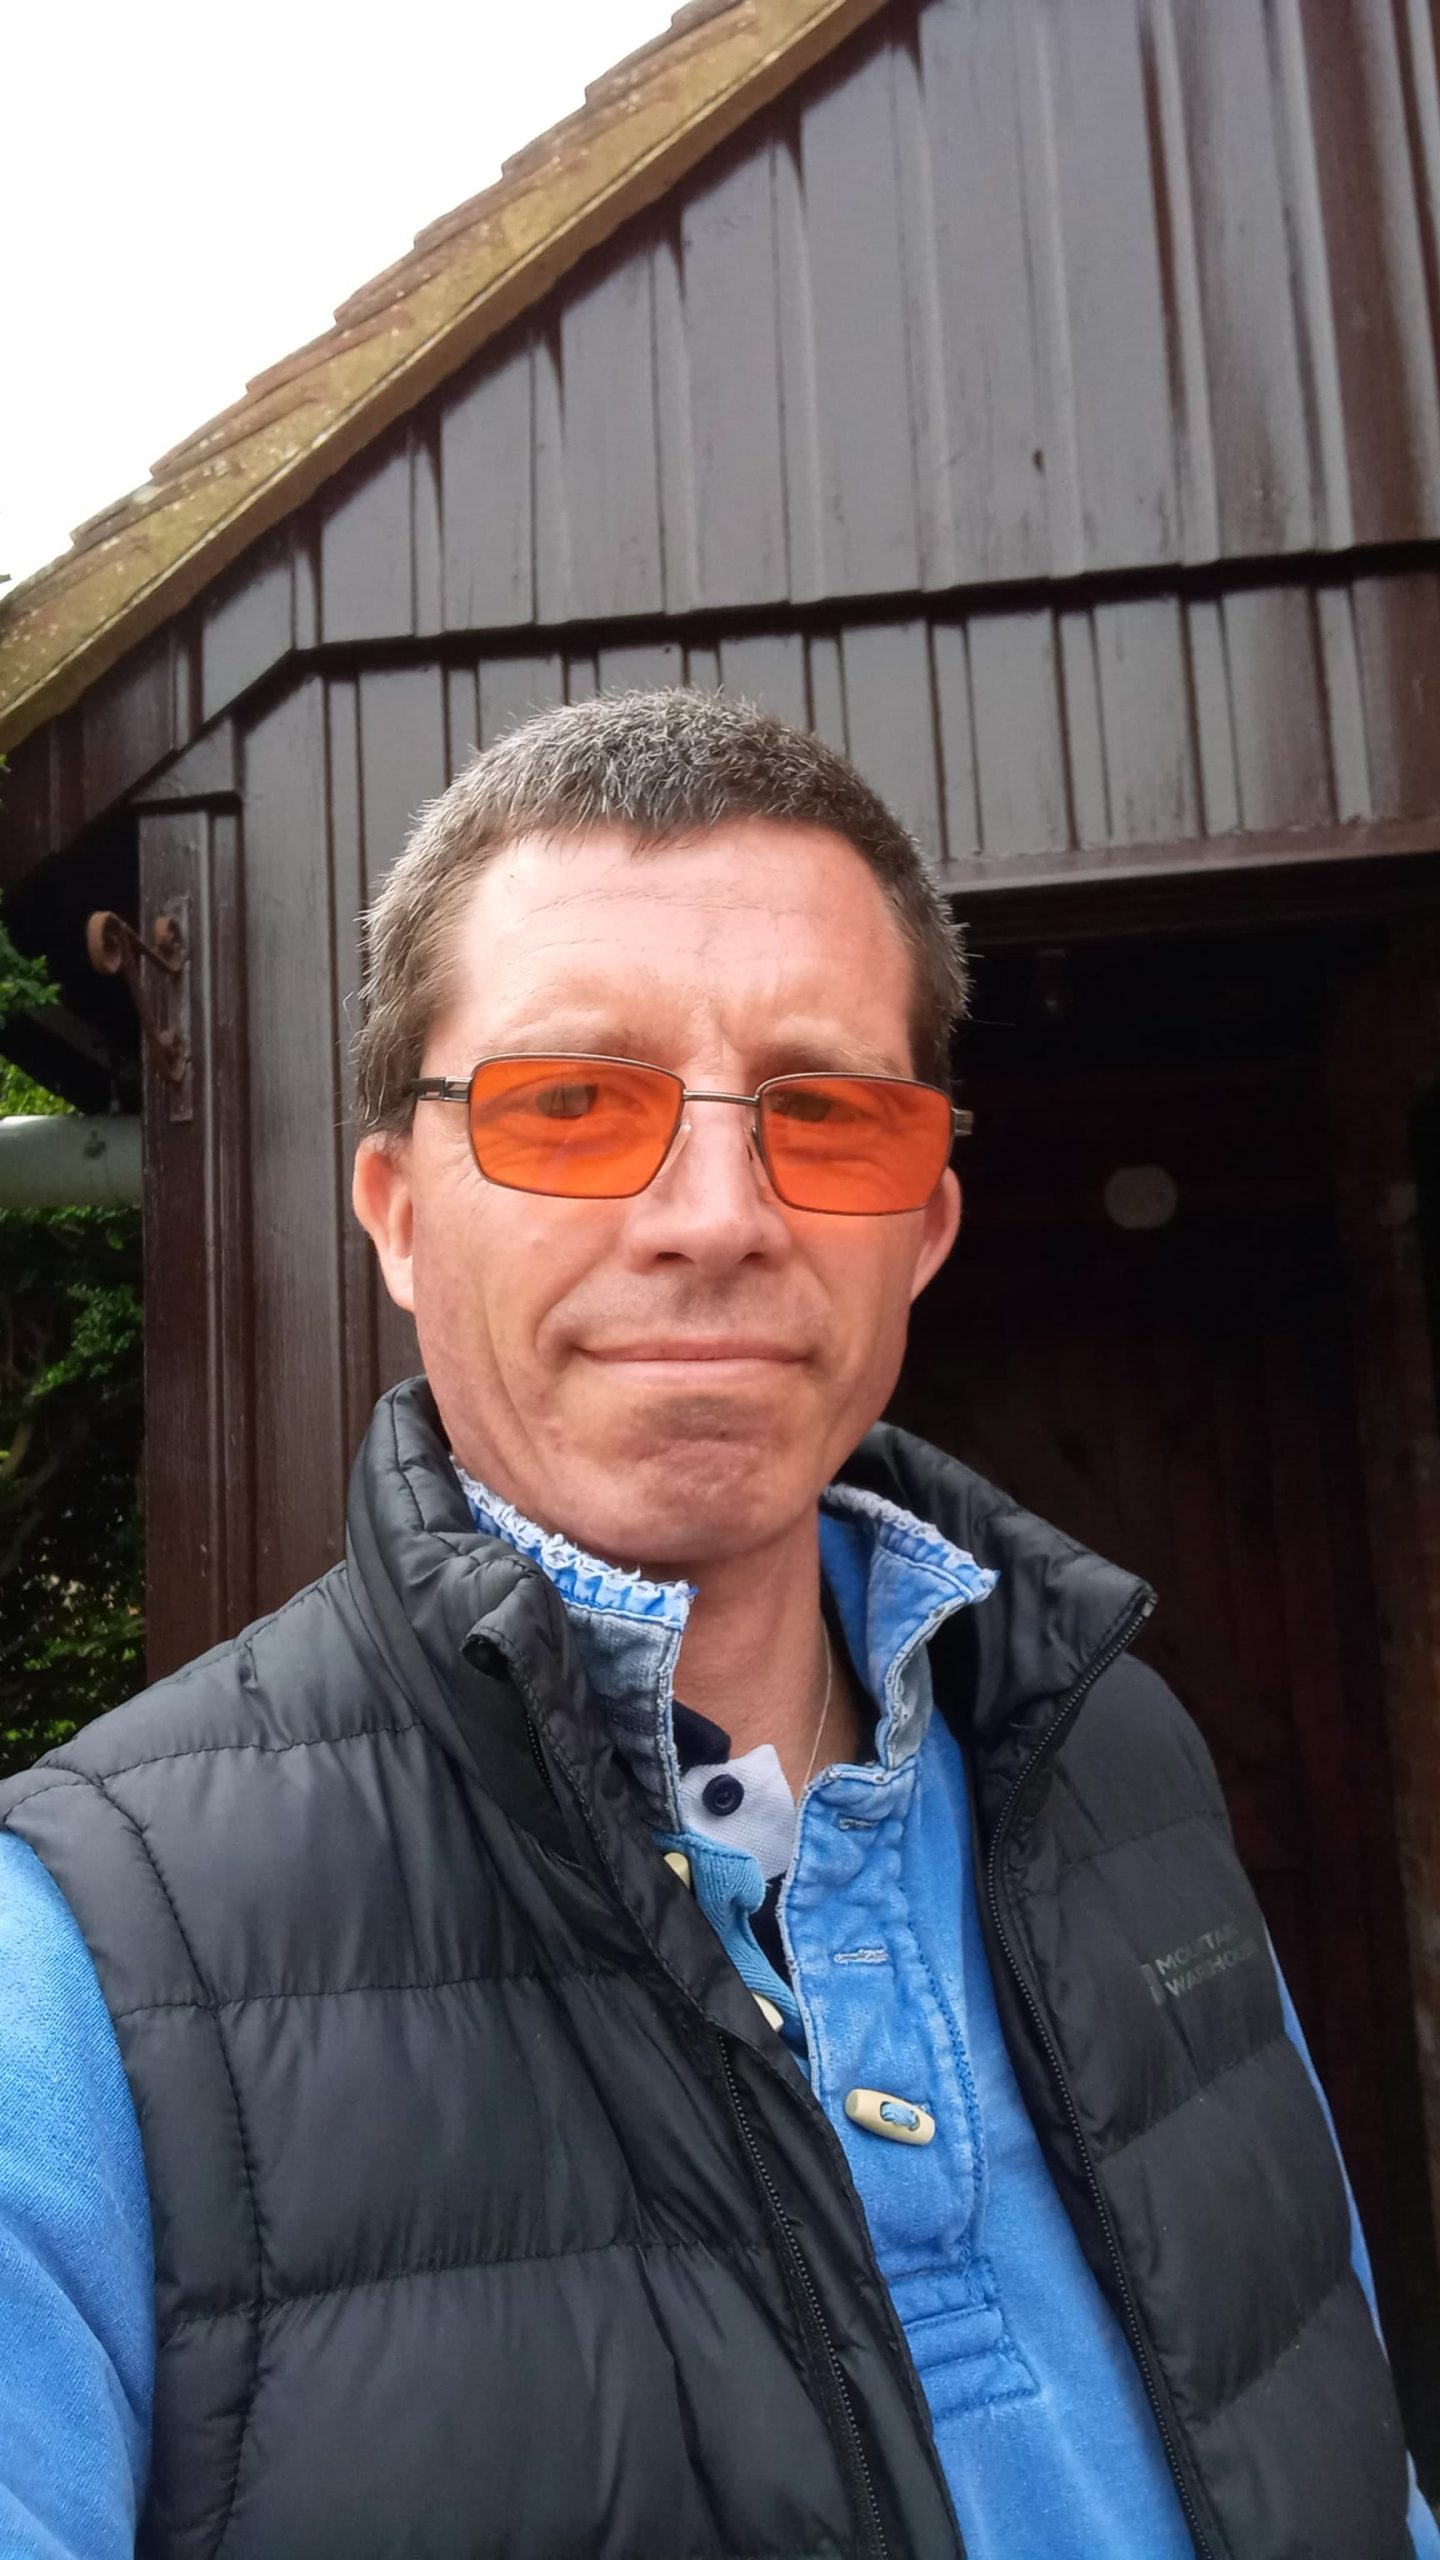 James Hart smiling in his orange tinted glasses